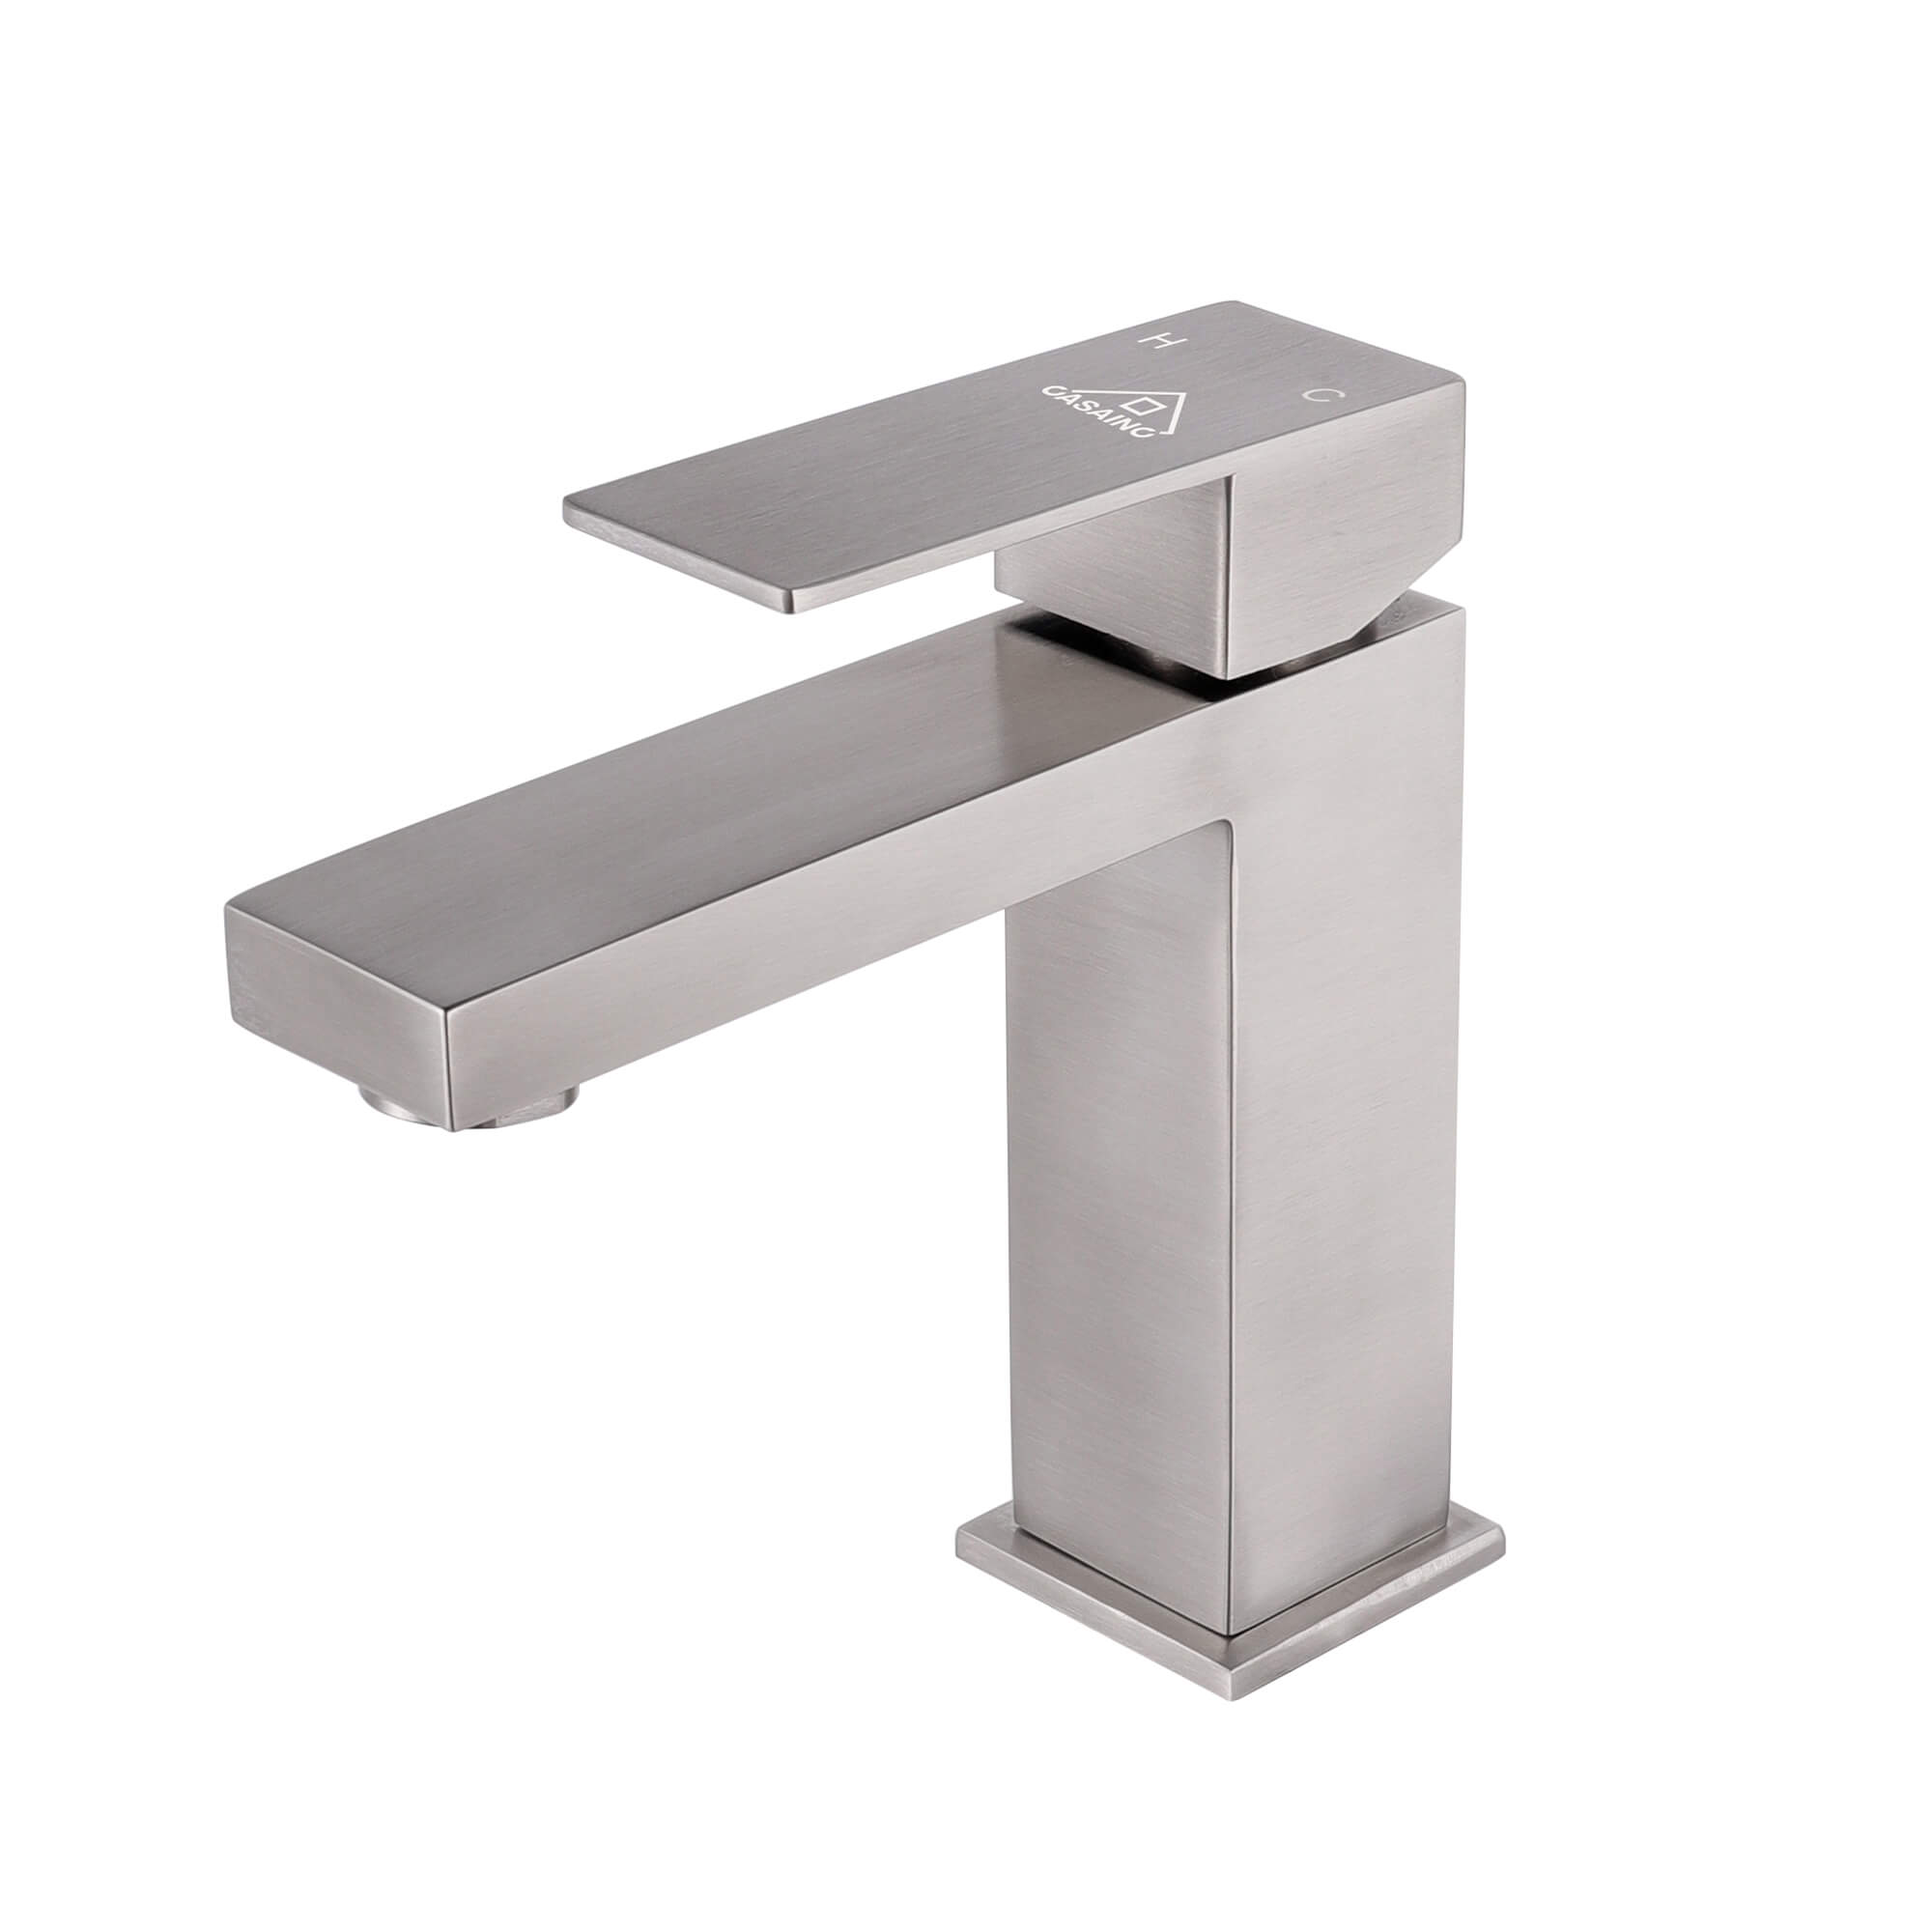 Casainc Brushed Nickel 1-Handle Residential Freestanding Sink Faucet